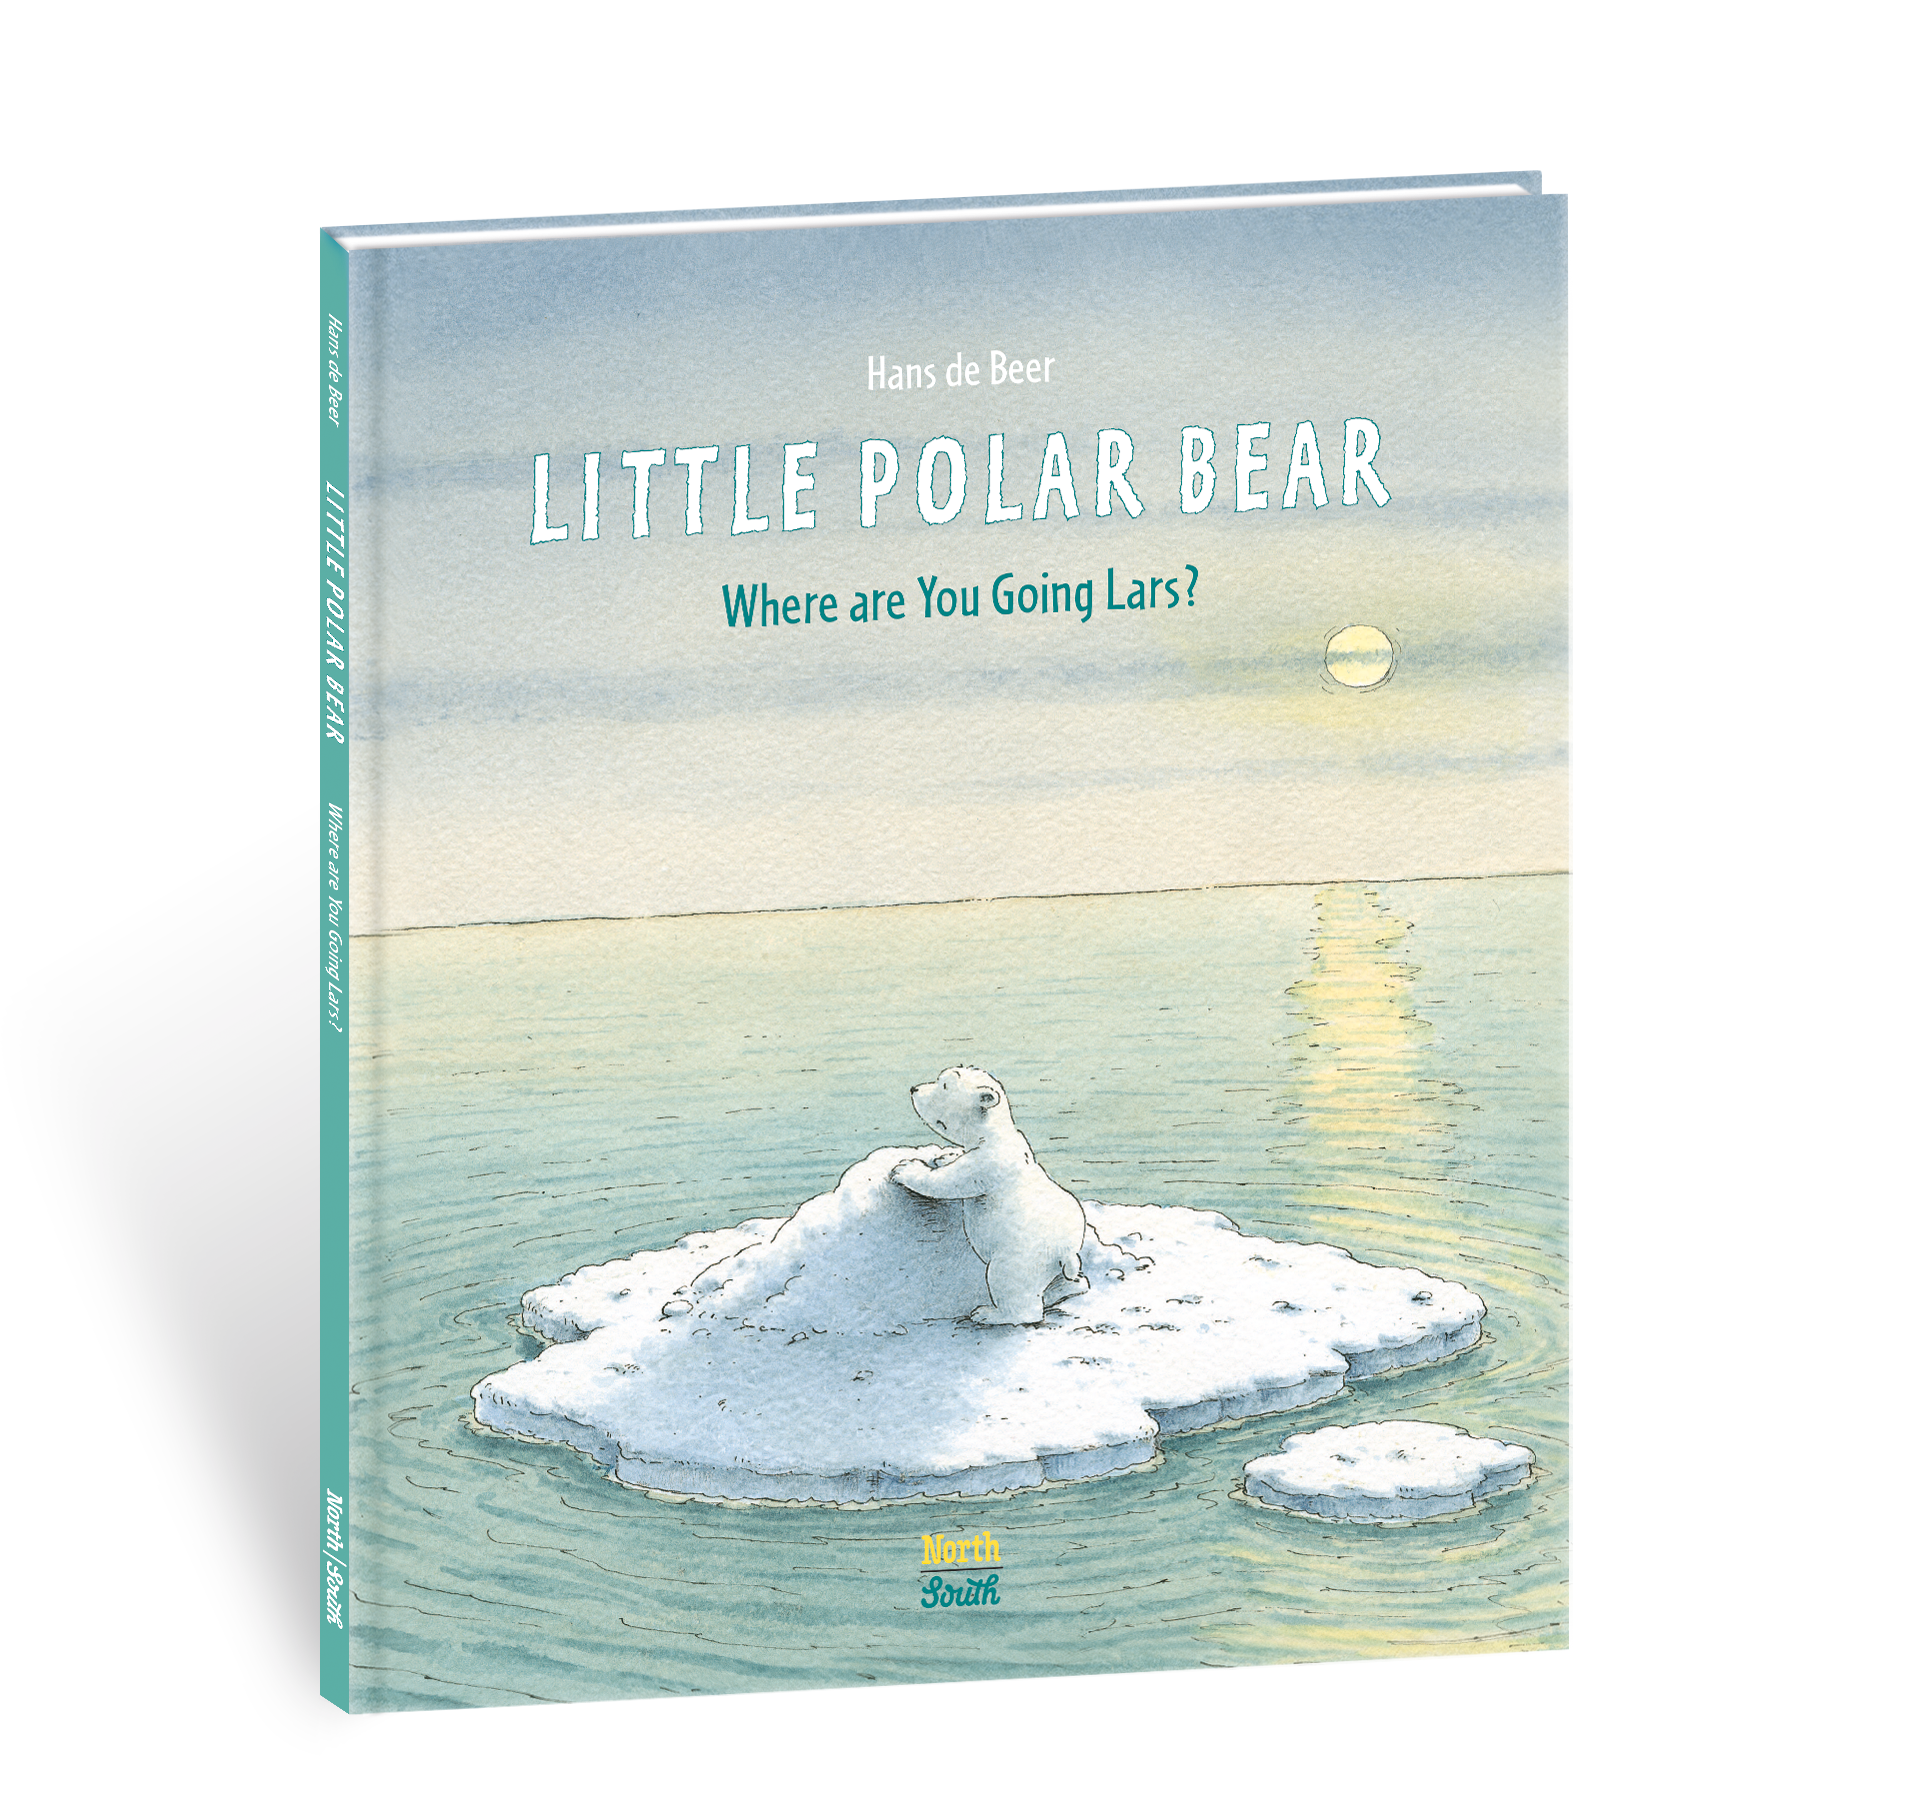 The Little Polar Bear – Wikipédia, a enciclopédia livre